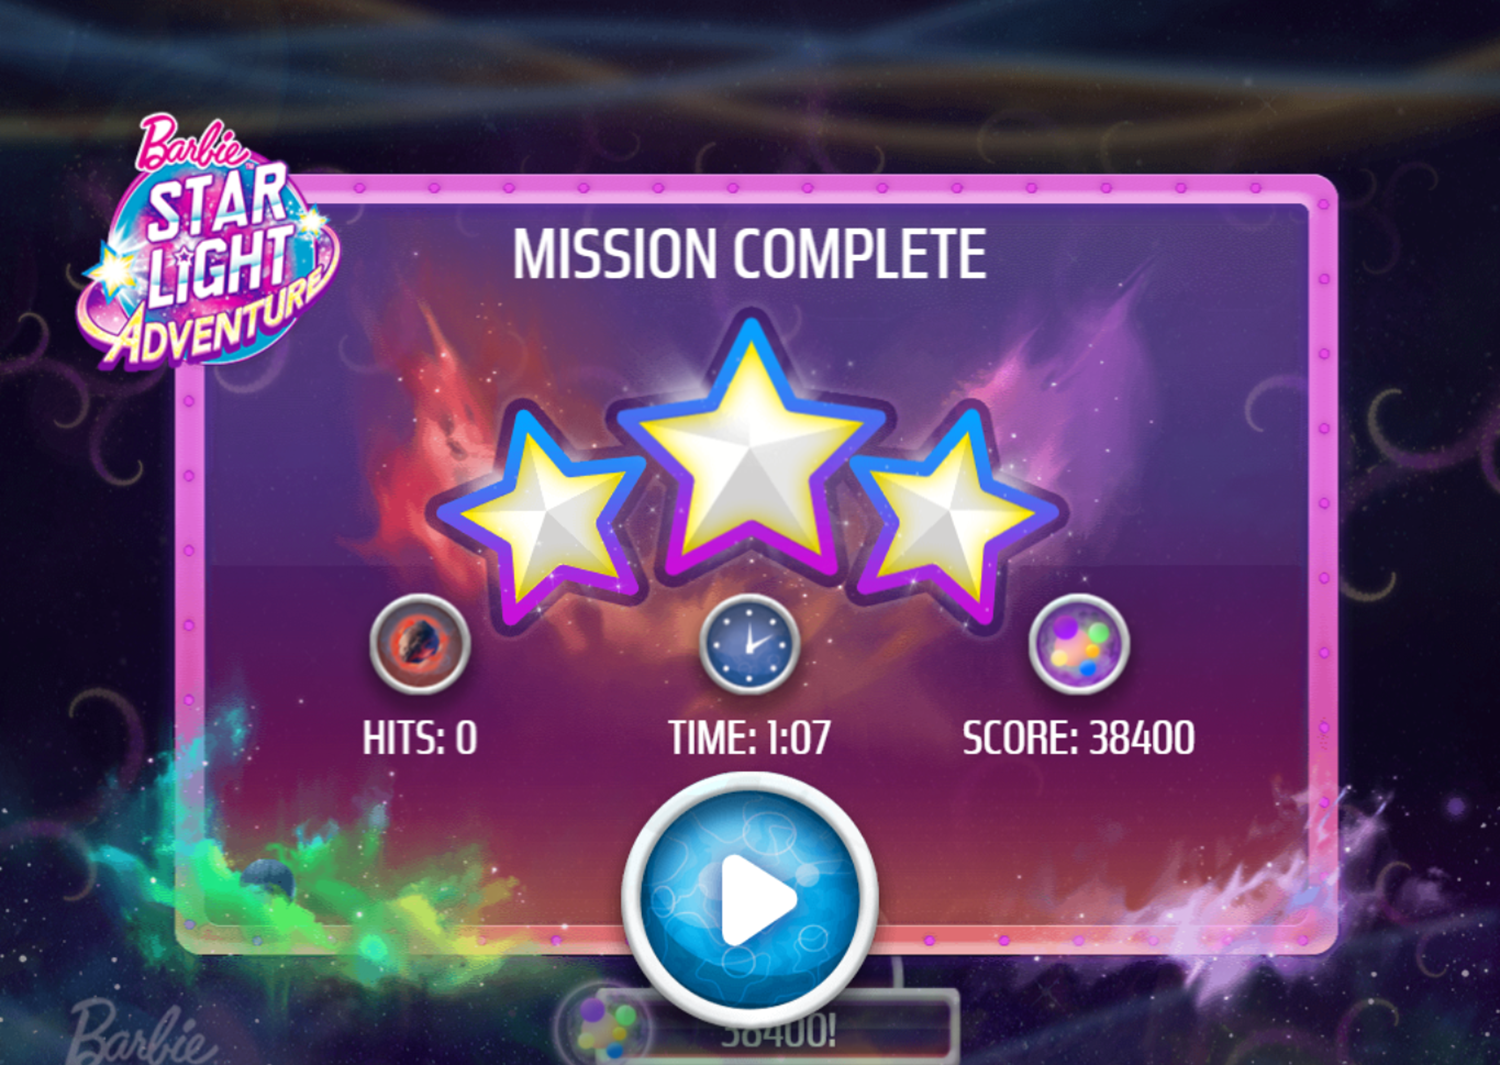 Barbie Star Light Adventure Game Mission Complete Screenshot.